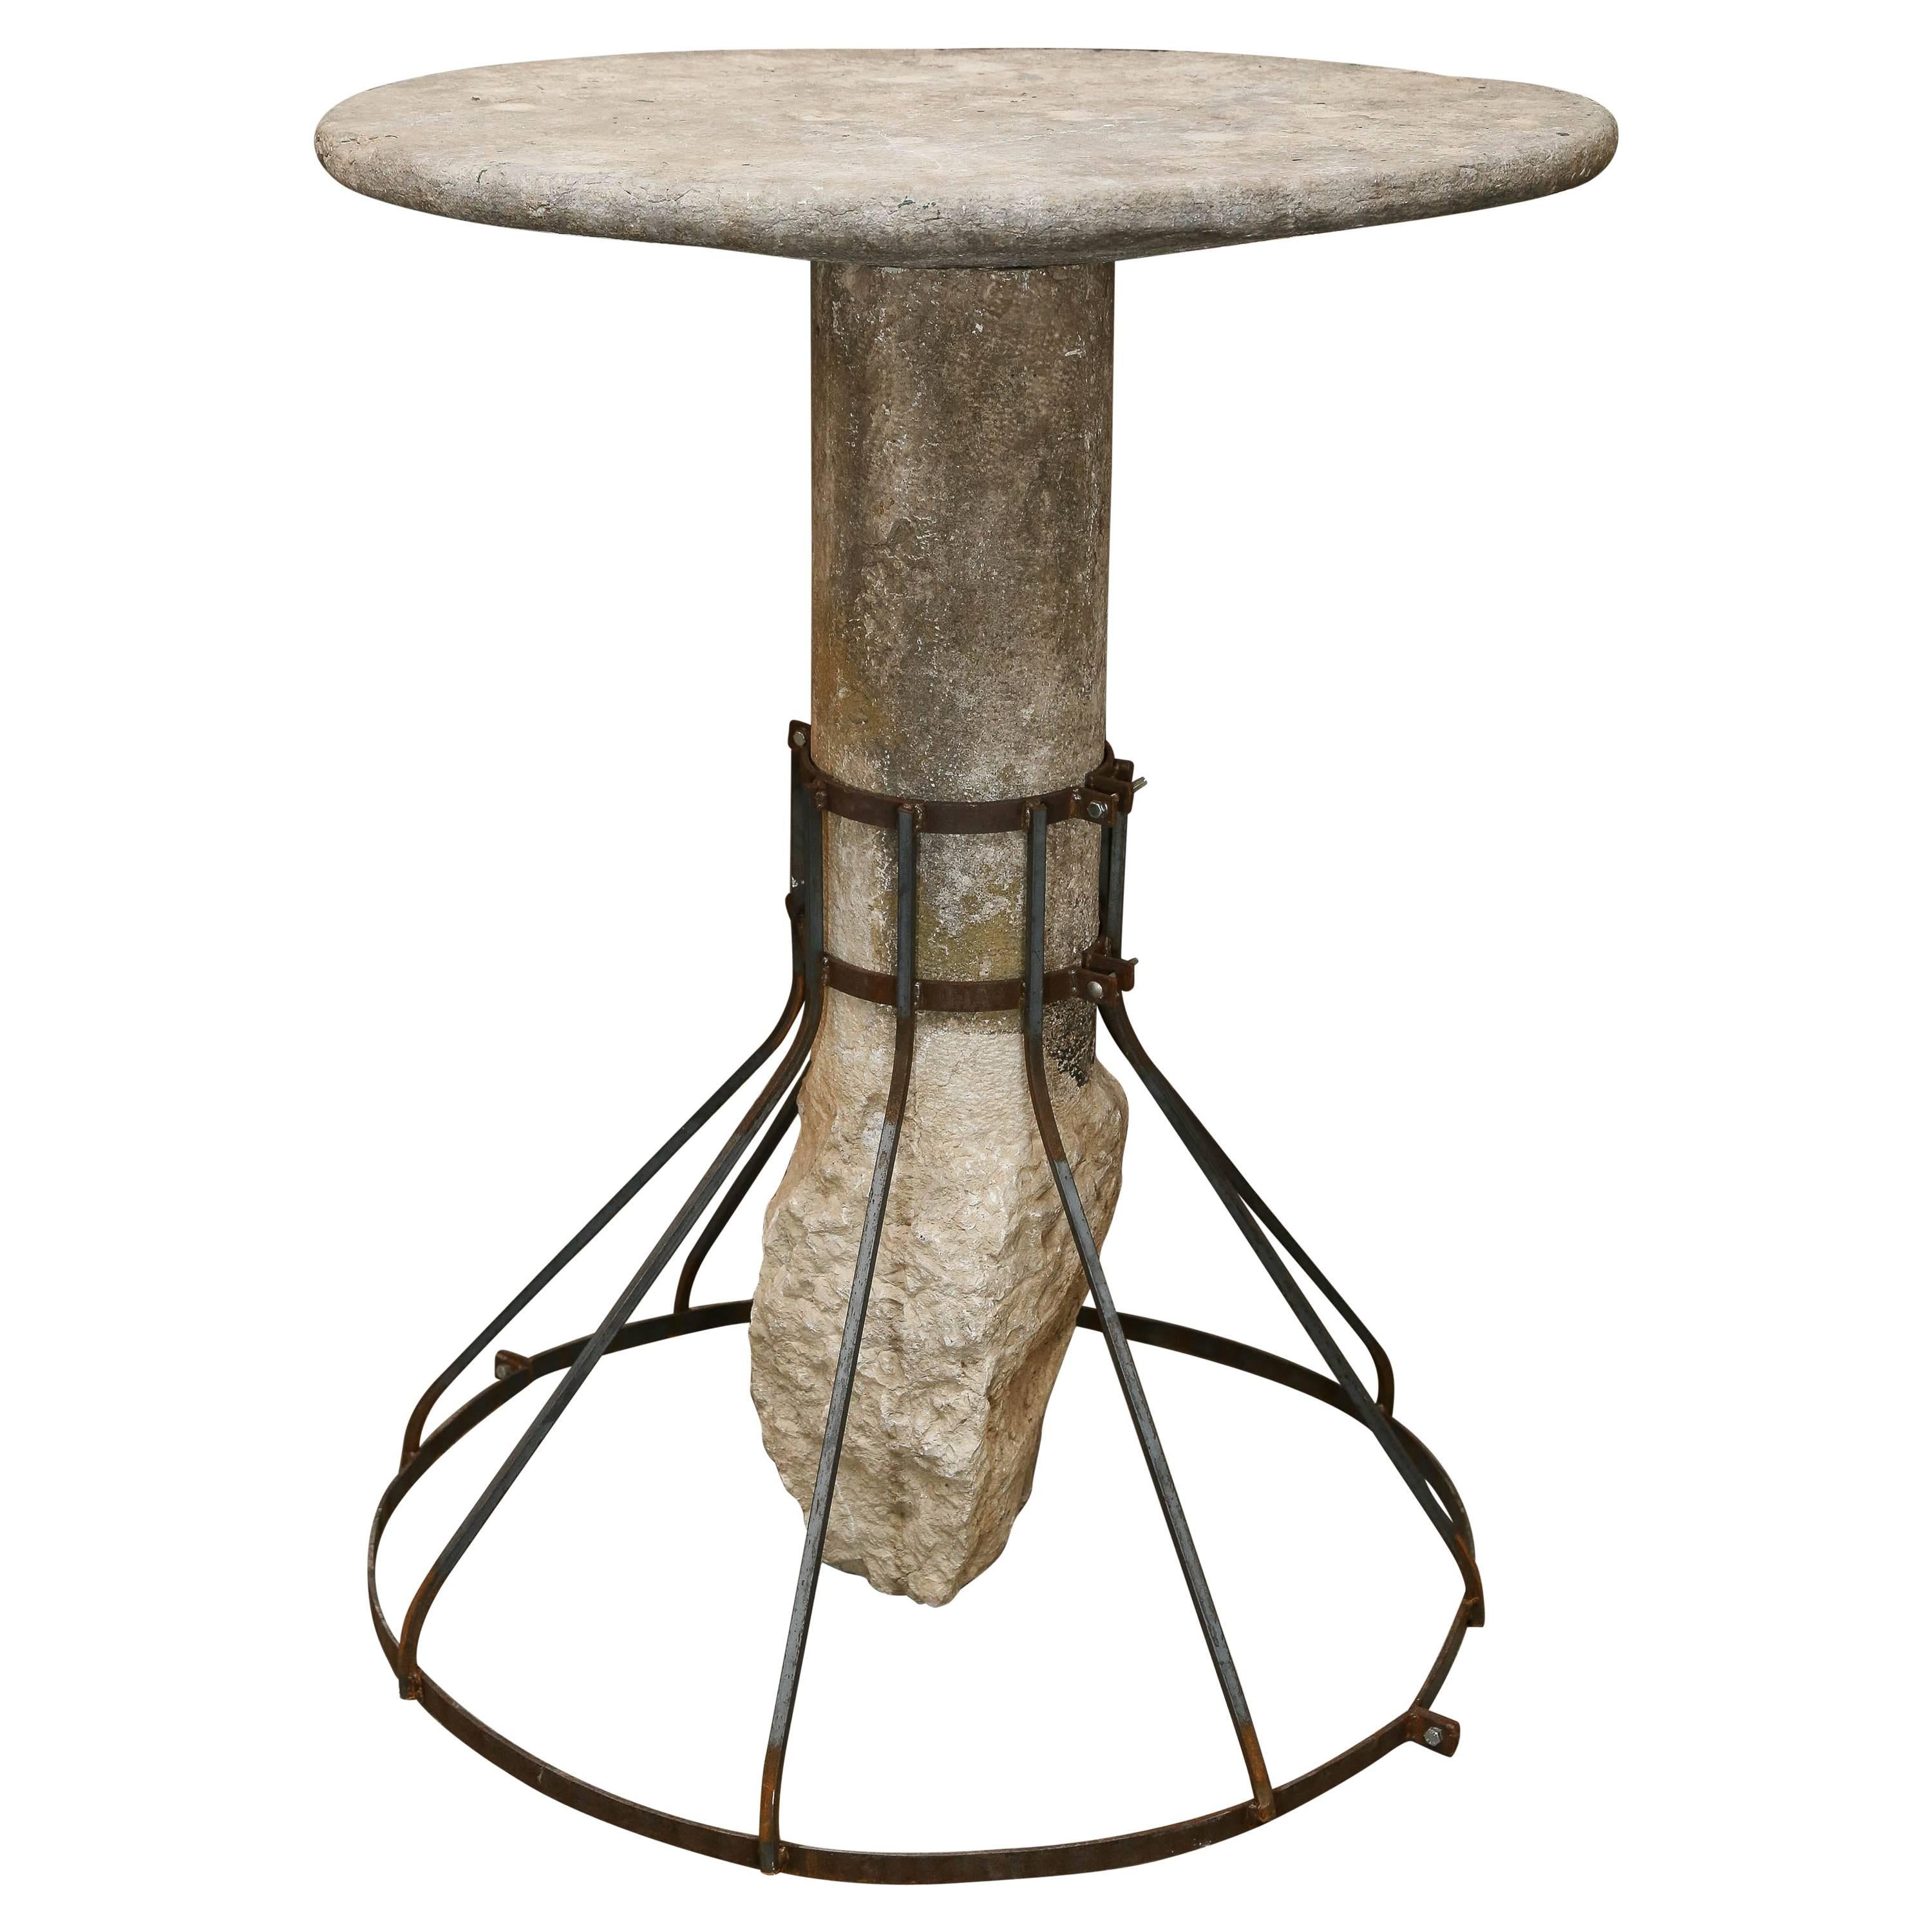 Ancient Italian Oval Shape Stone Garden Table with Original Stone Base